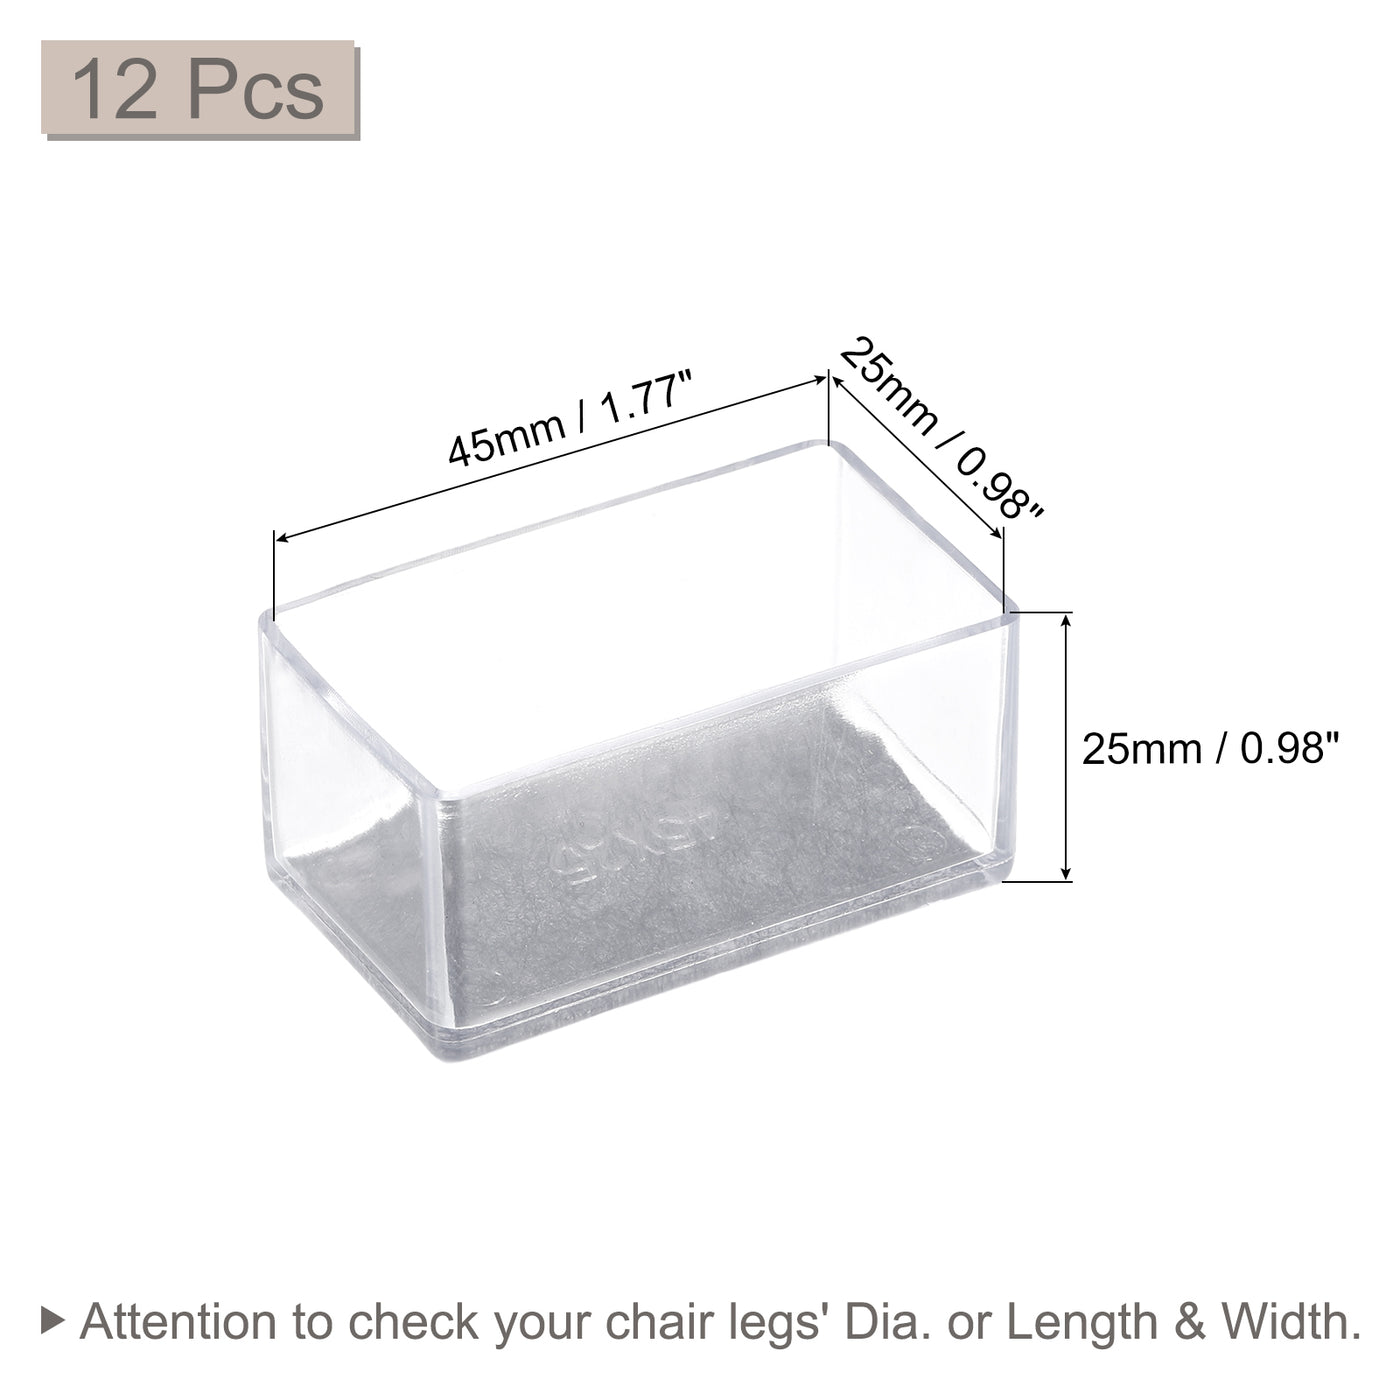 uxcell Uxcell Chair Leg Floor Protectors, 12Pcs 45mm(1.77") Rectangle PVC & Felt Chair Leg Cover Caps for Hardwood Floors (Clear White)